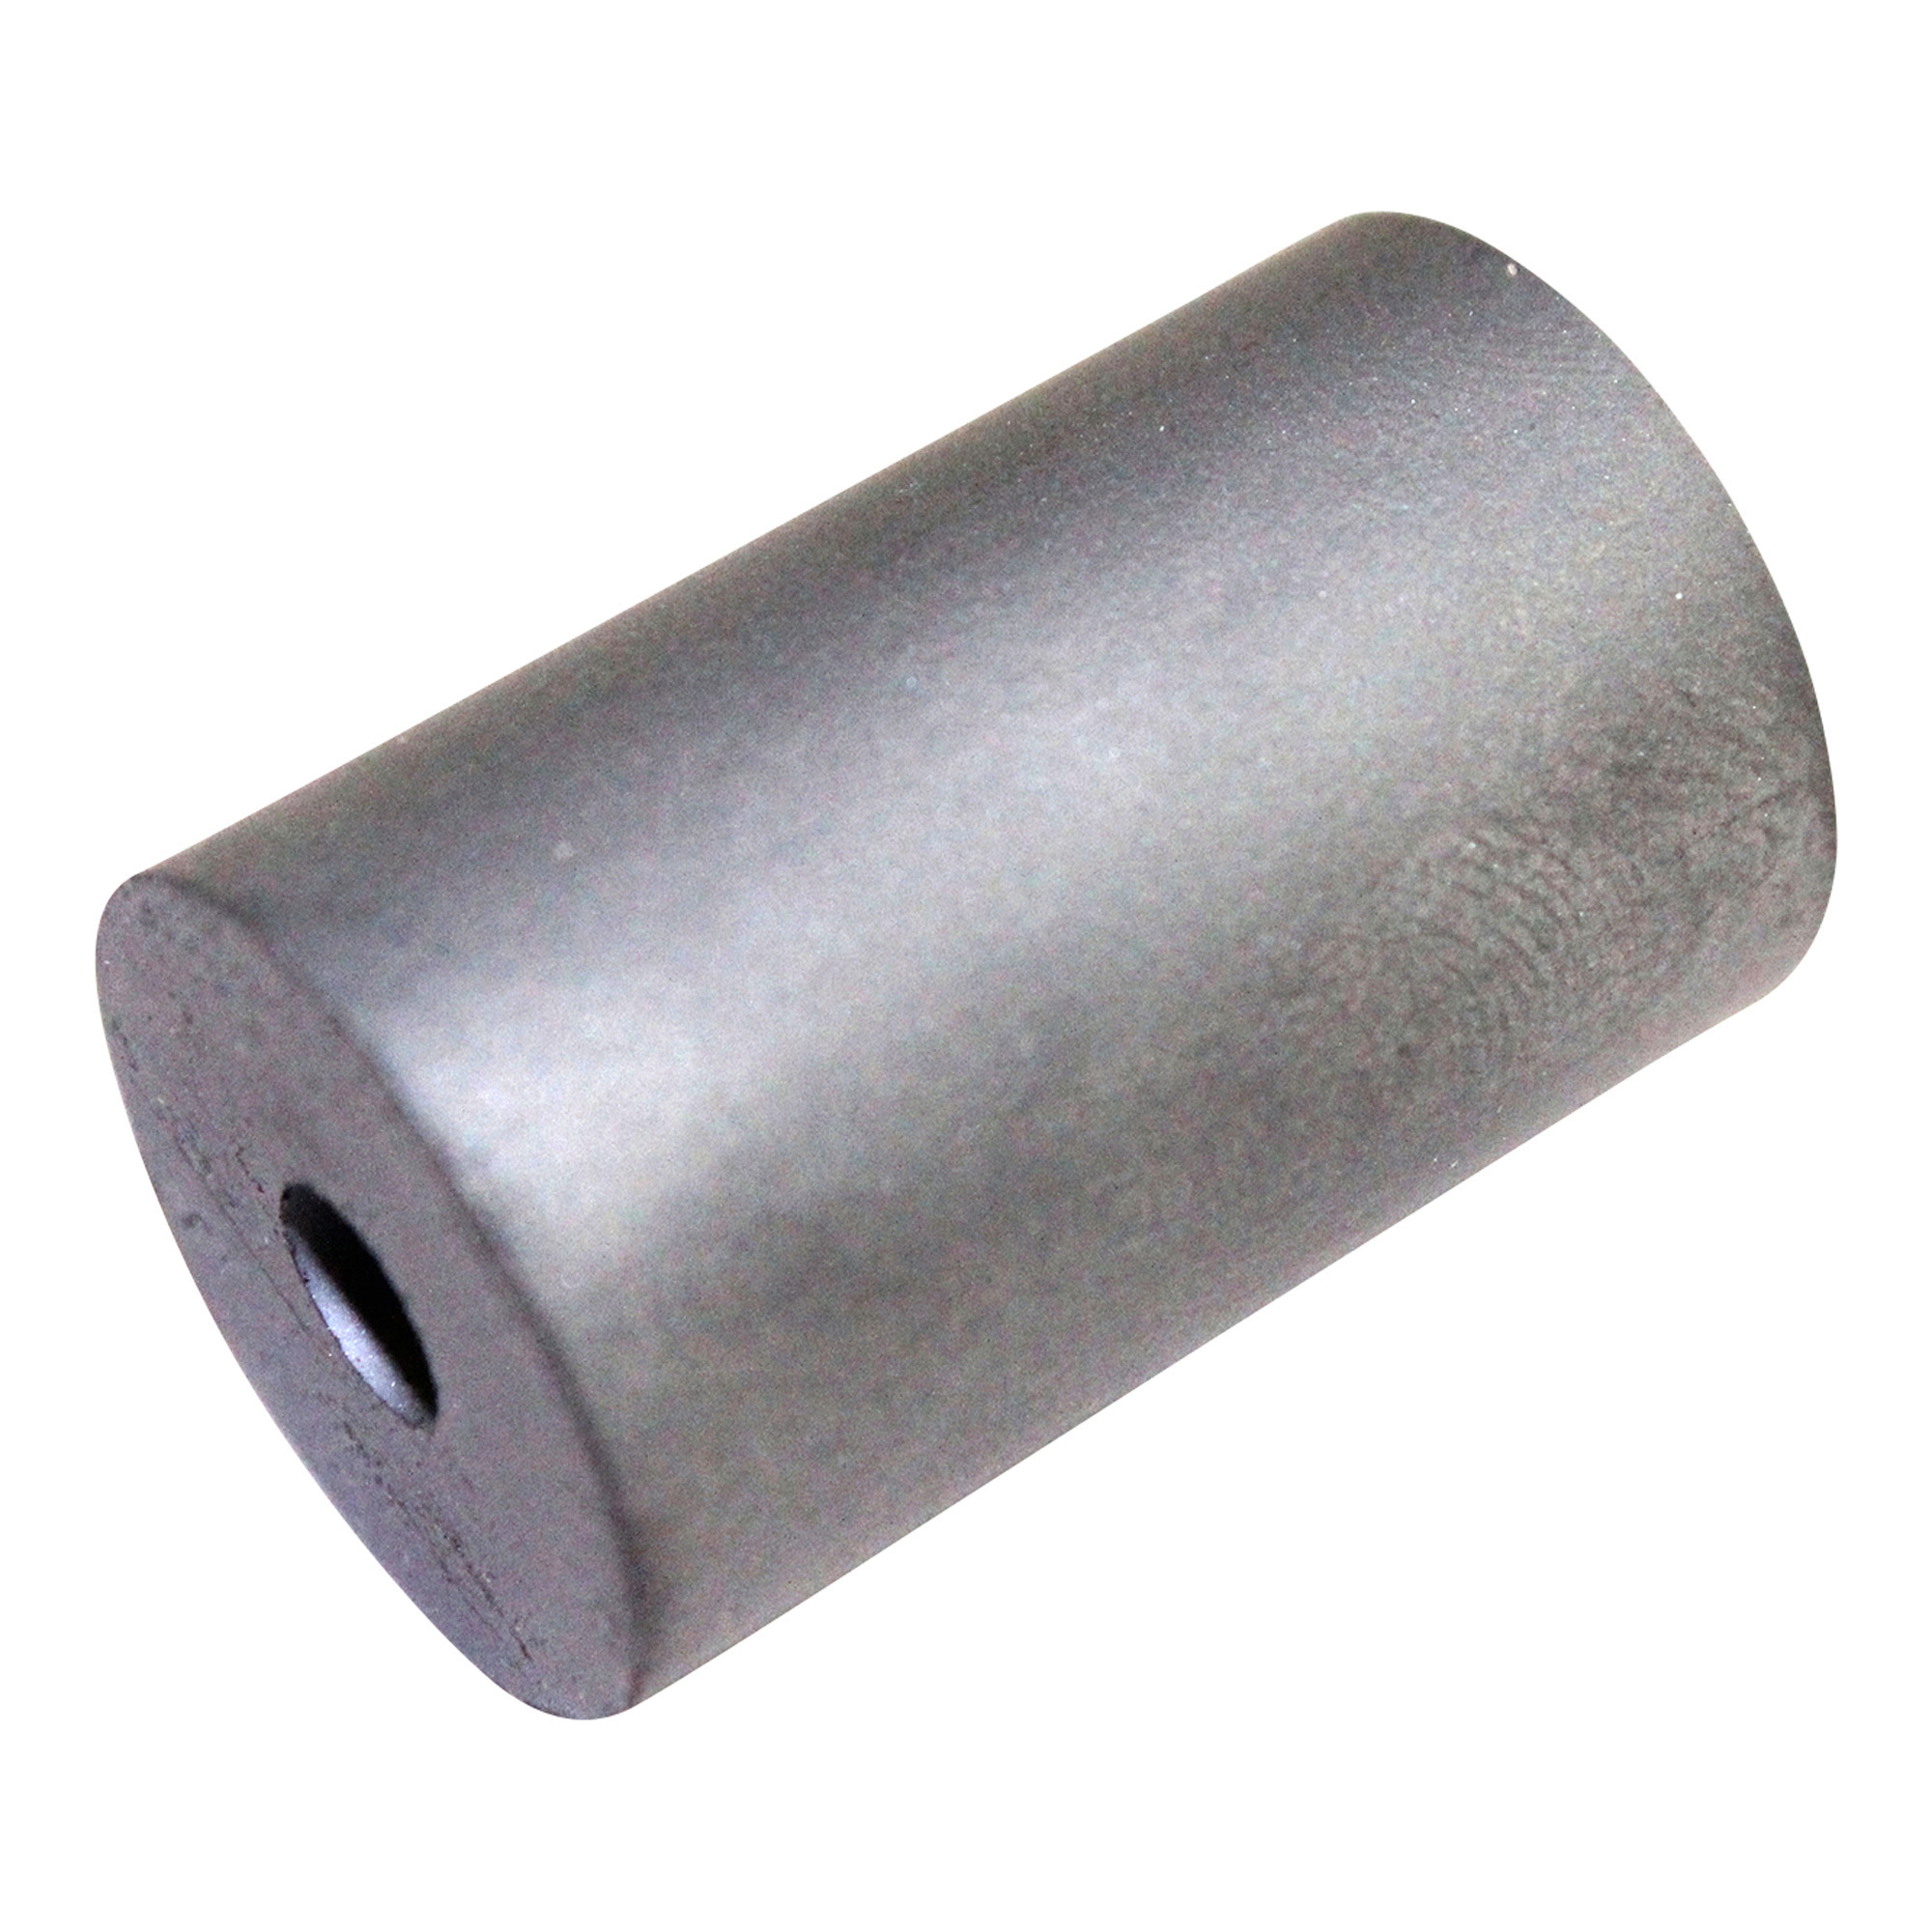 AllSource Abrasive Blaster Boron Carbide Nozzle â 4mm, Model 4204804